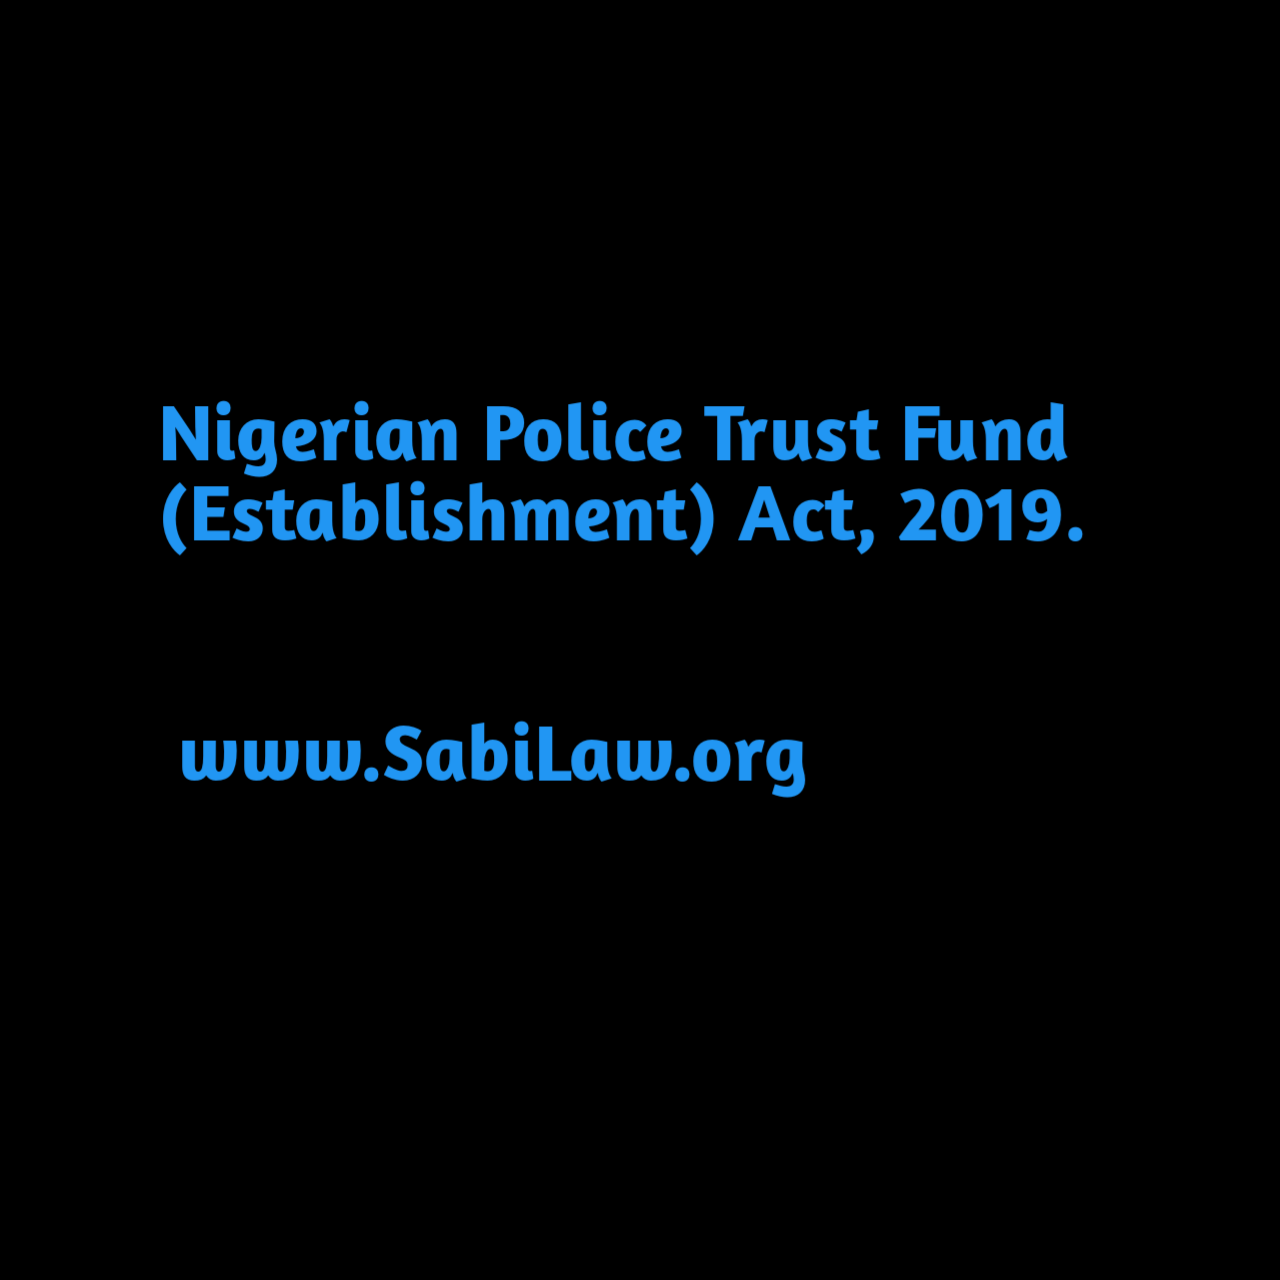 Copy of the Nigerian Police Trust Fund (Establishment) Act, 2019